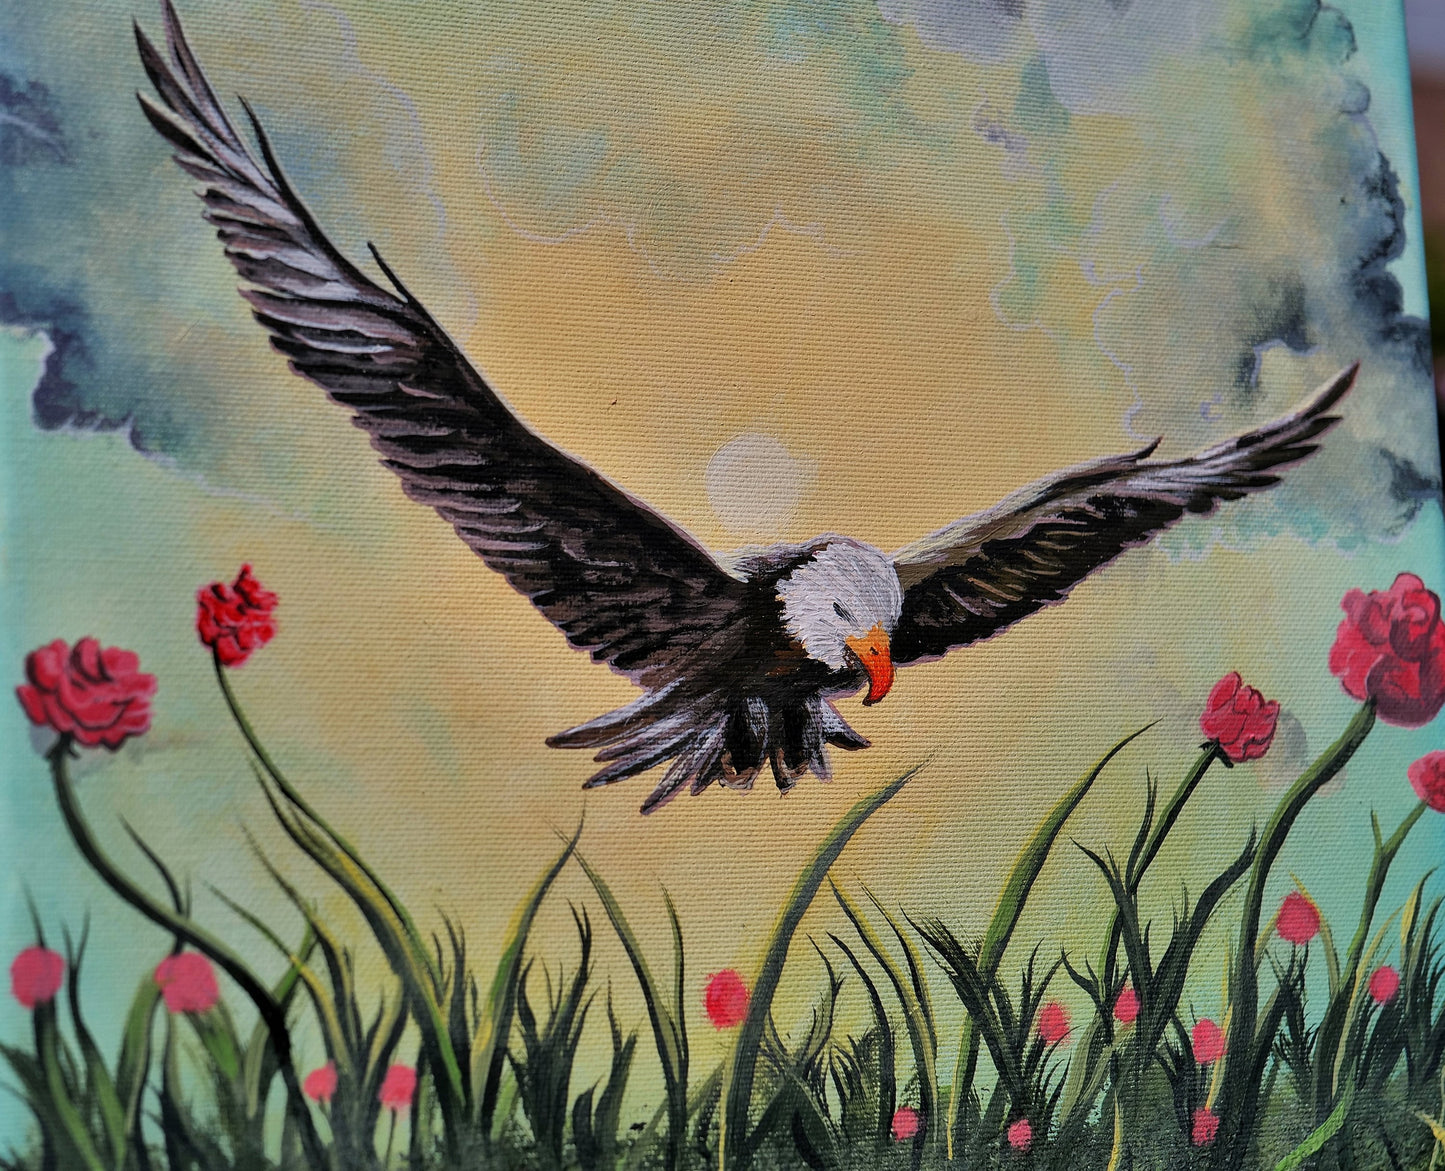 Greatness | Eagle | Spirit animal | Landscape & Nature | Print on Canvas